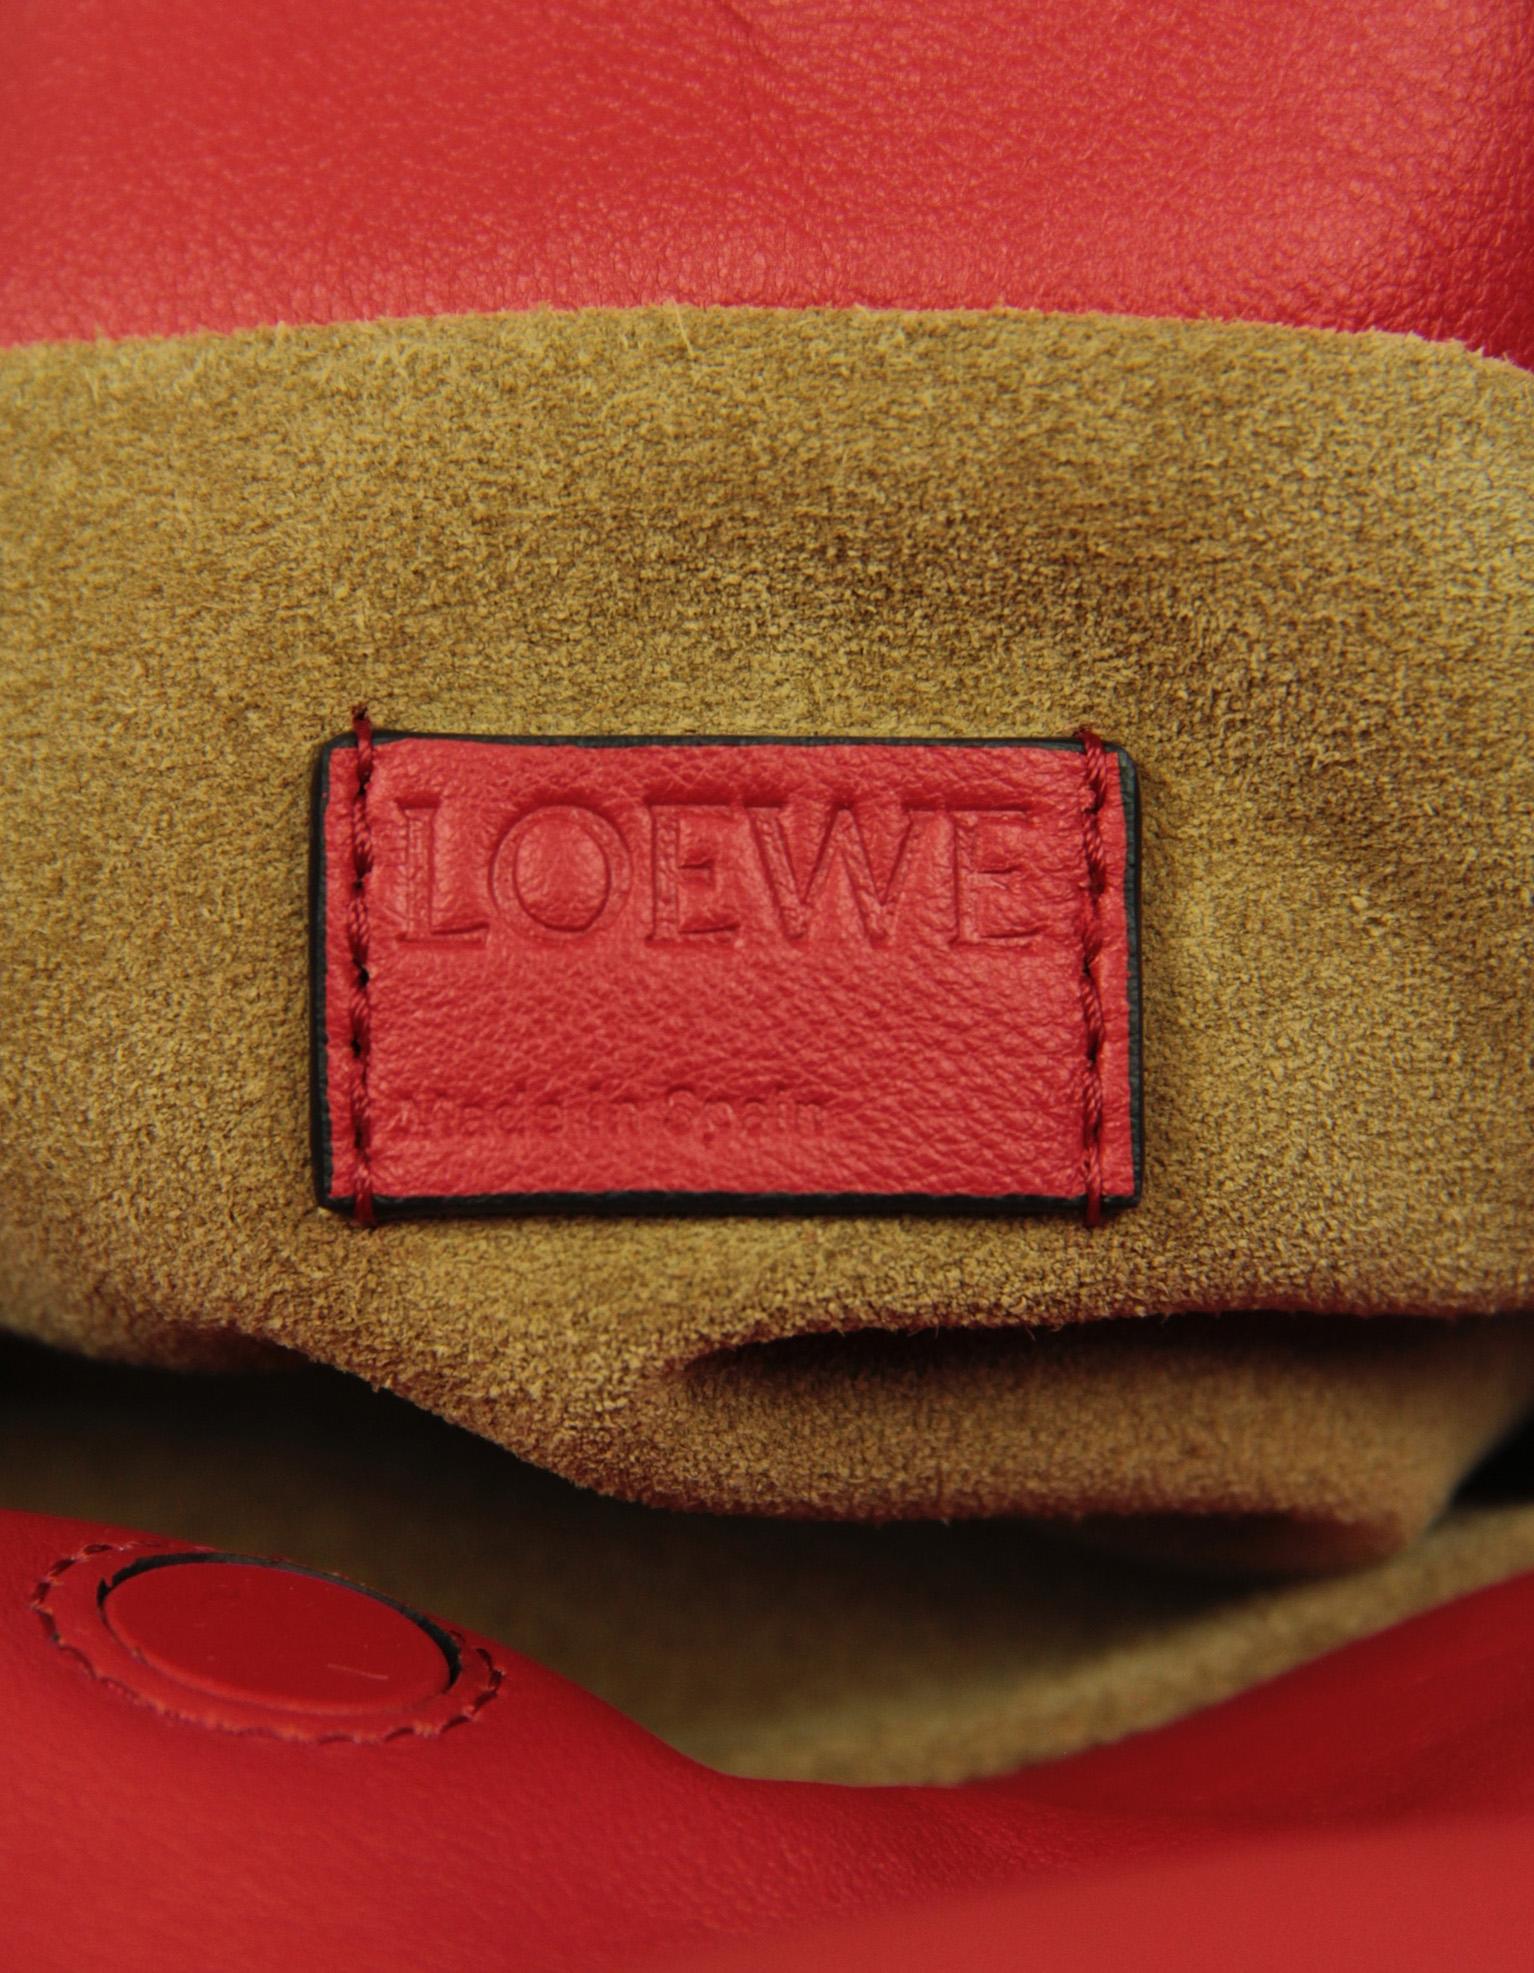 Loewe Red Calfskin Leather Flamenco Bag w/ Donut Chain For Sale 2